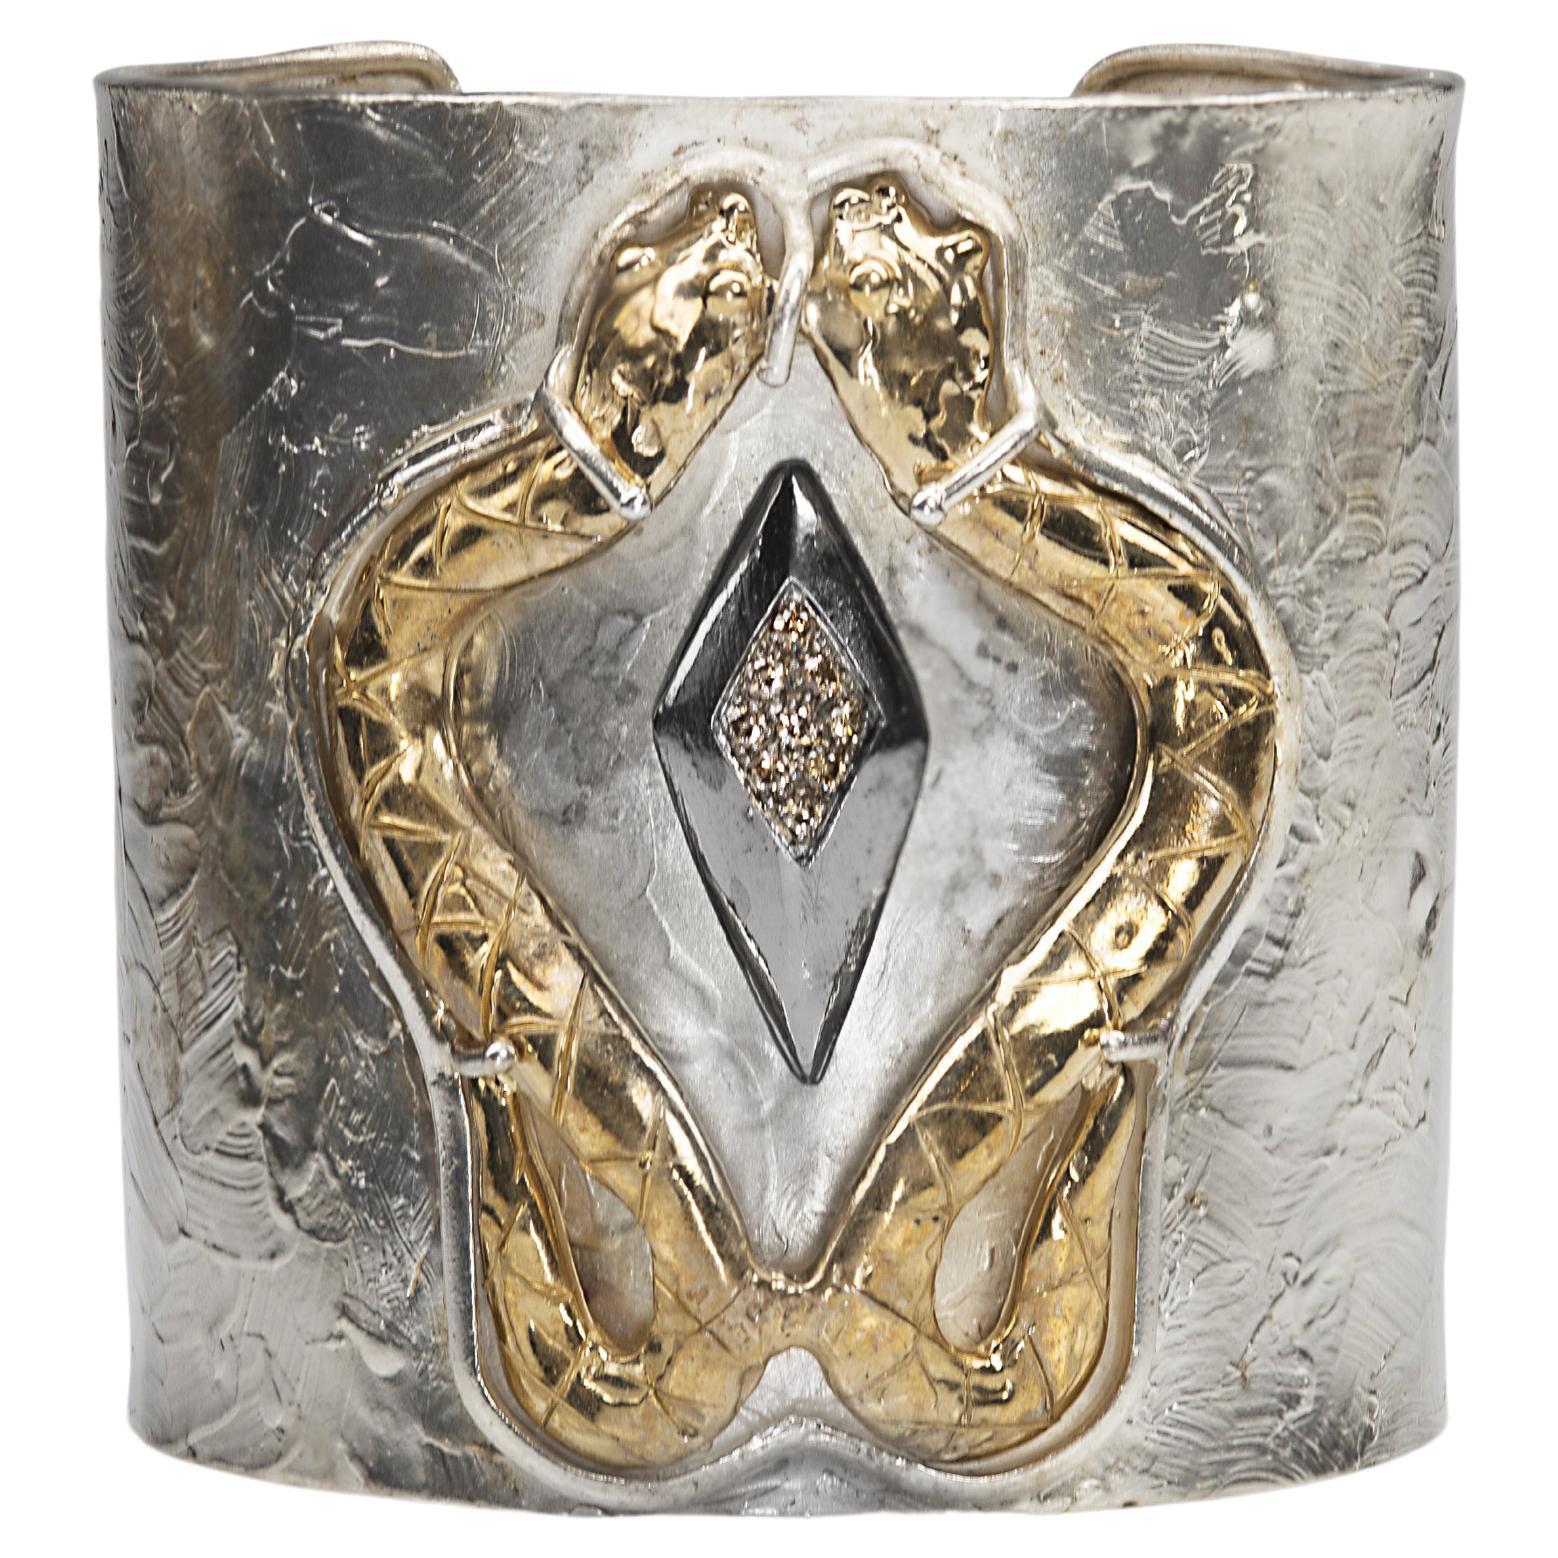 Featured auf Rapaport 0,20 Karat Diamant vergoldetes Silber-Manschettenarmband 